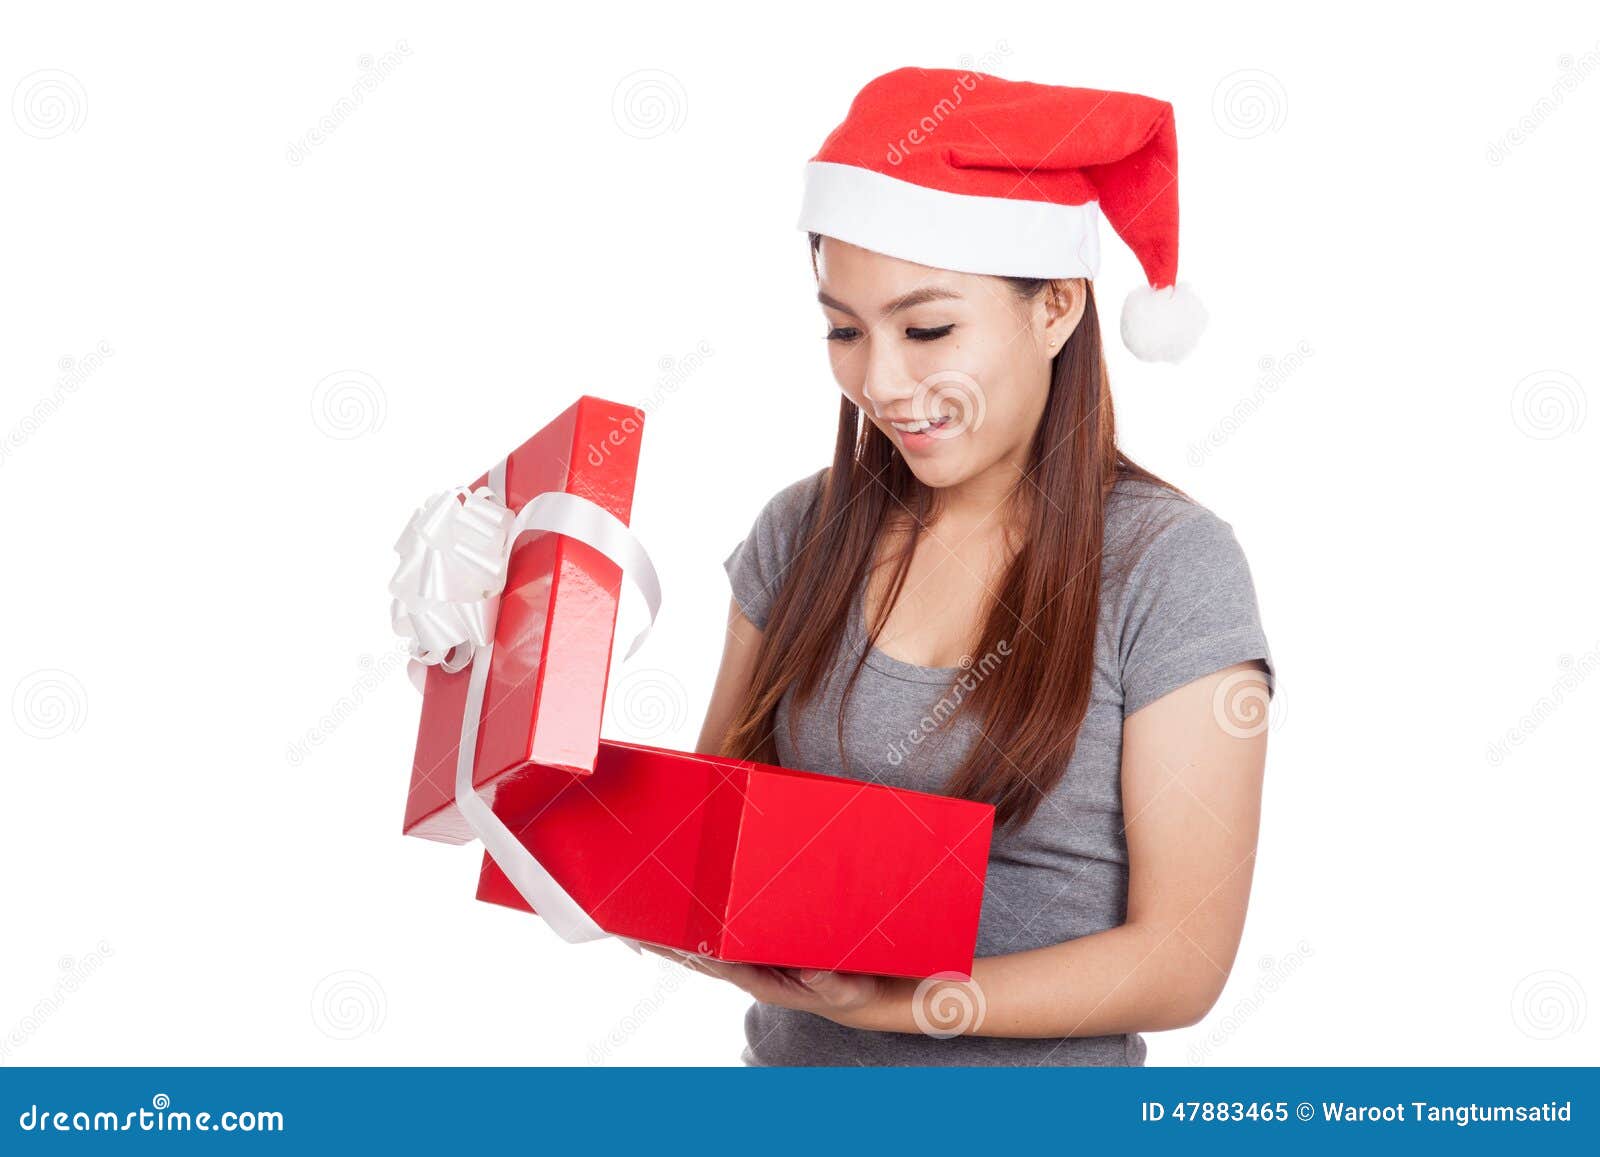 https://thumbs.dreamstime.com/z/asian-girl-red-santa-hat-open-look-inside-gift-box-isolated-white-background-47883465.jpg